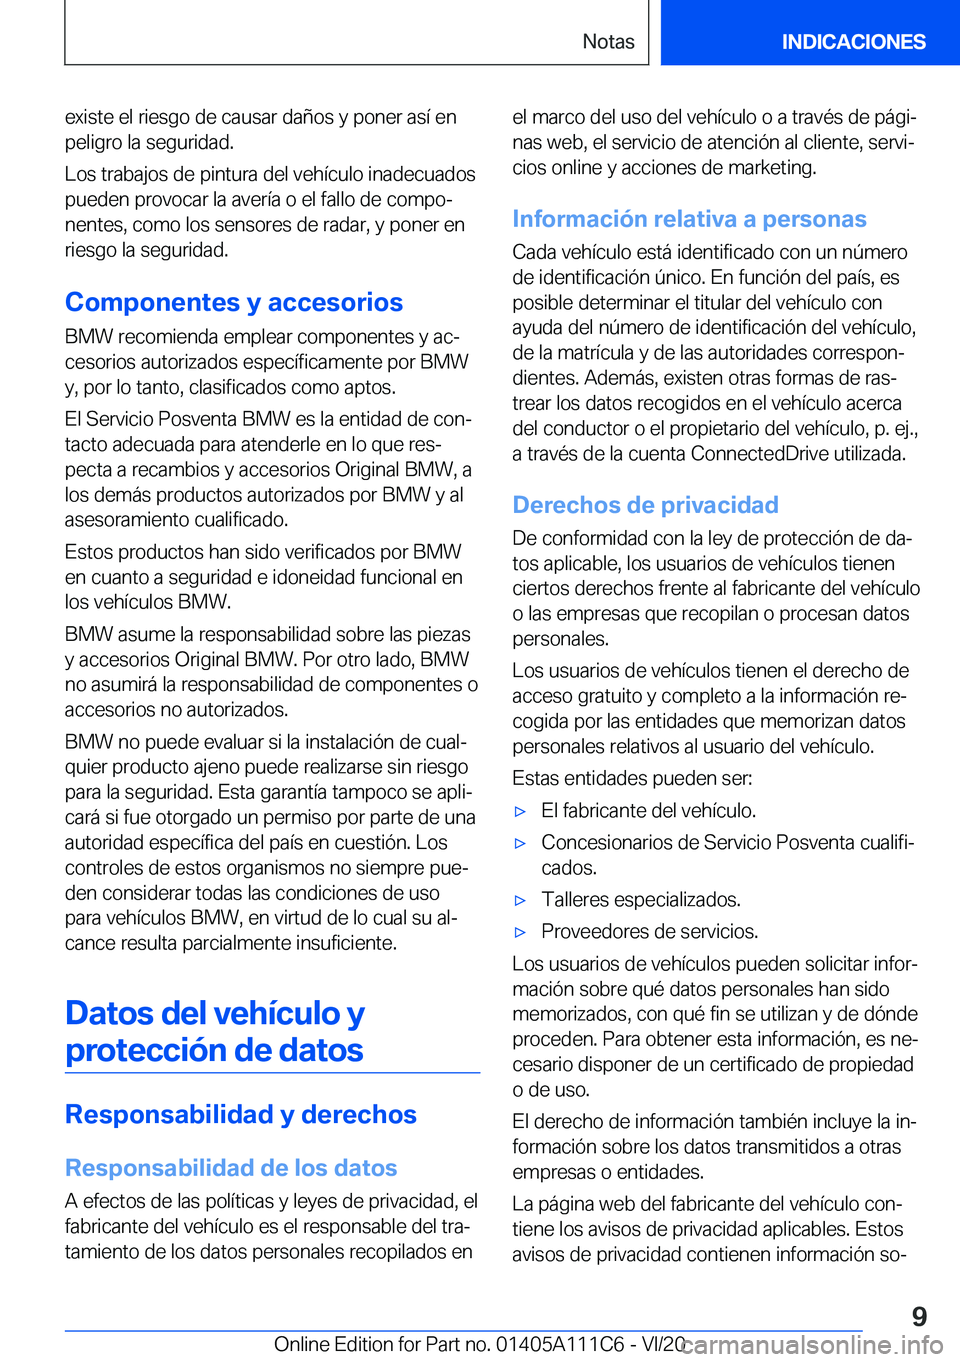 BMW 3 SERIES SEDAN PLUG-IN HYBRID 2021  Manuales de Empleo (in Spanish) �e�x�i�s�t�e��e�l��r�i�e�s�g�o��d�e��c�a�u�s�a�r��d�a�